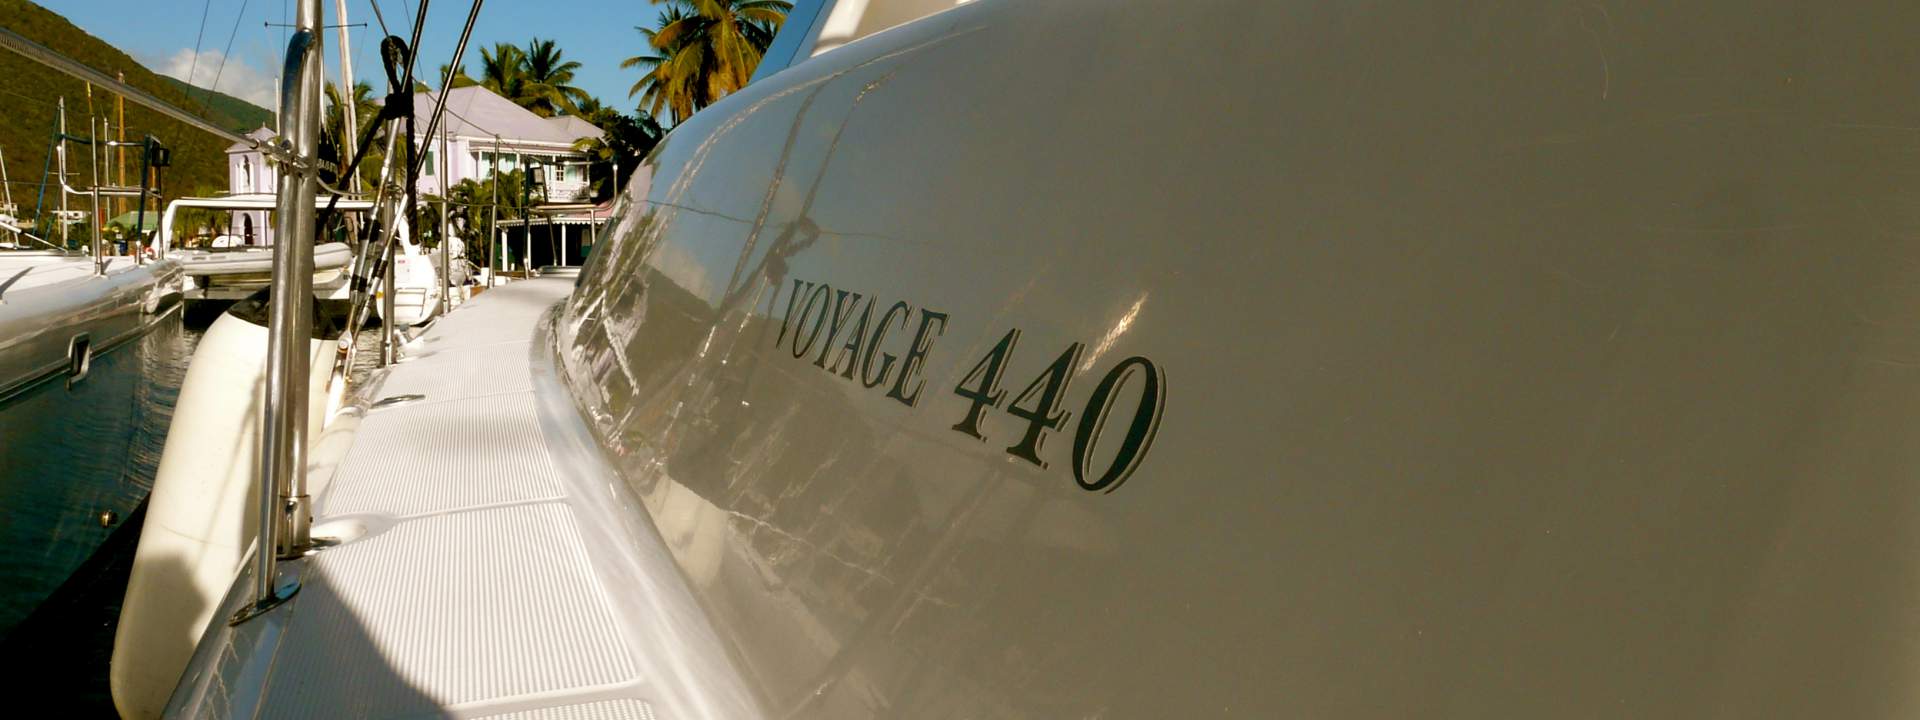 Voyage 440